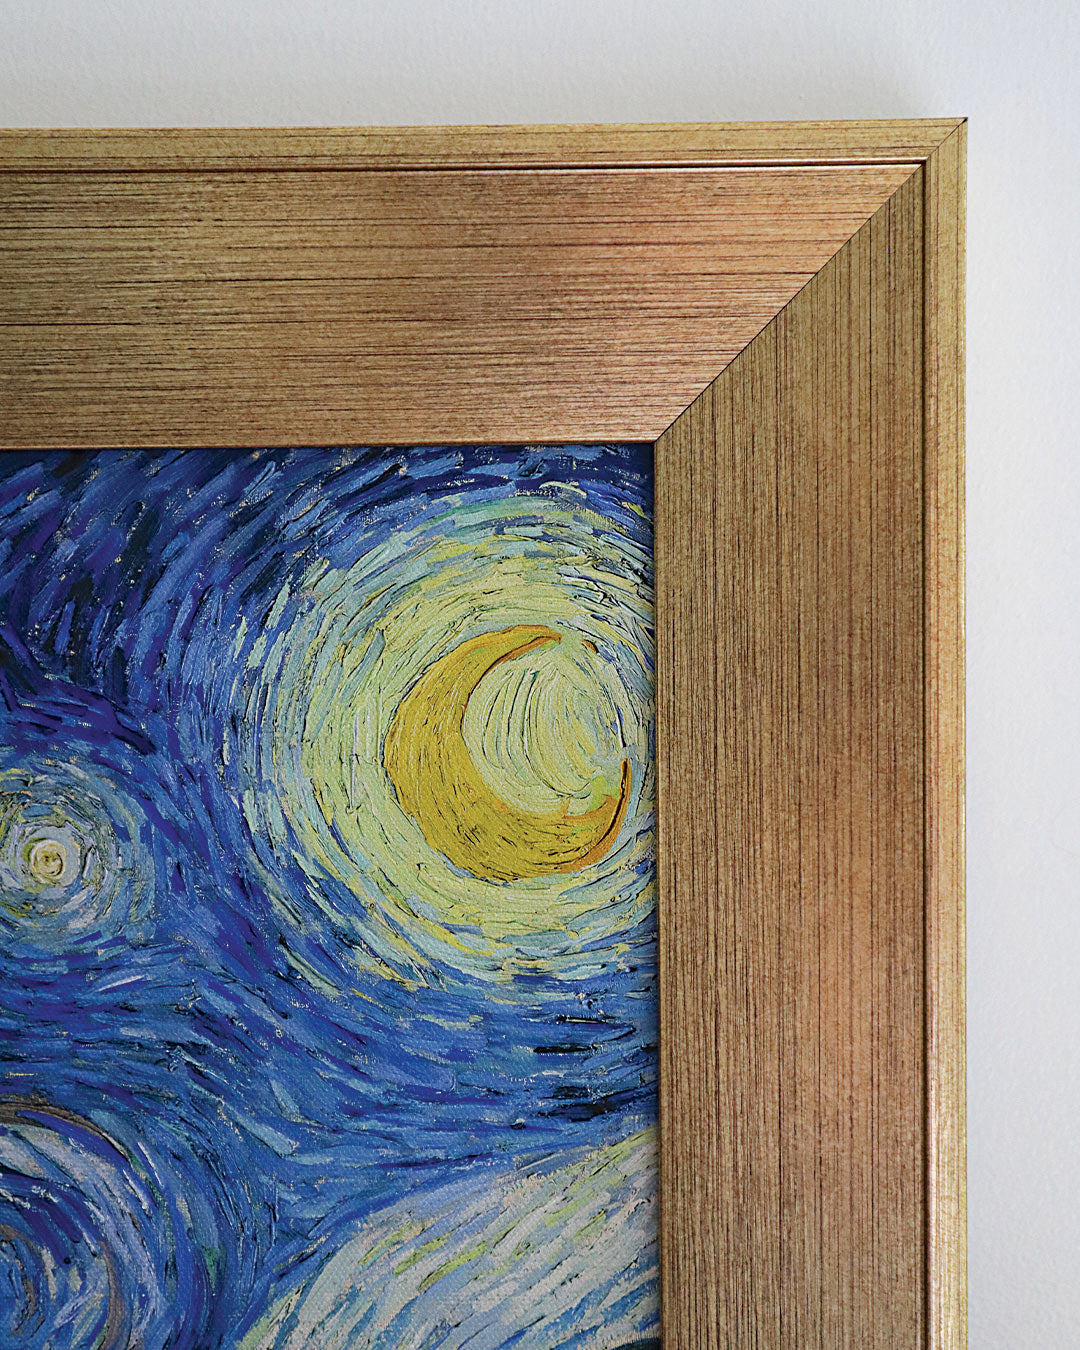 The Starry Night (1889) - Vincent Van Gogh